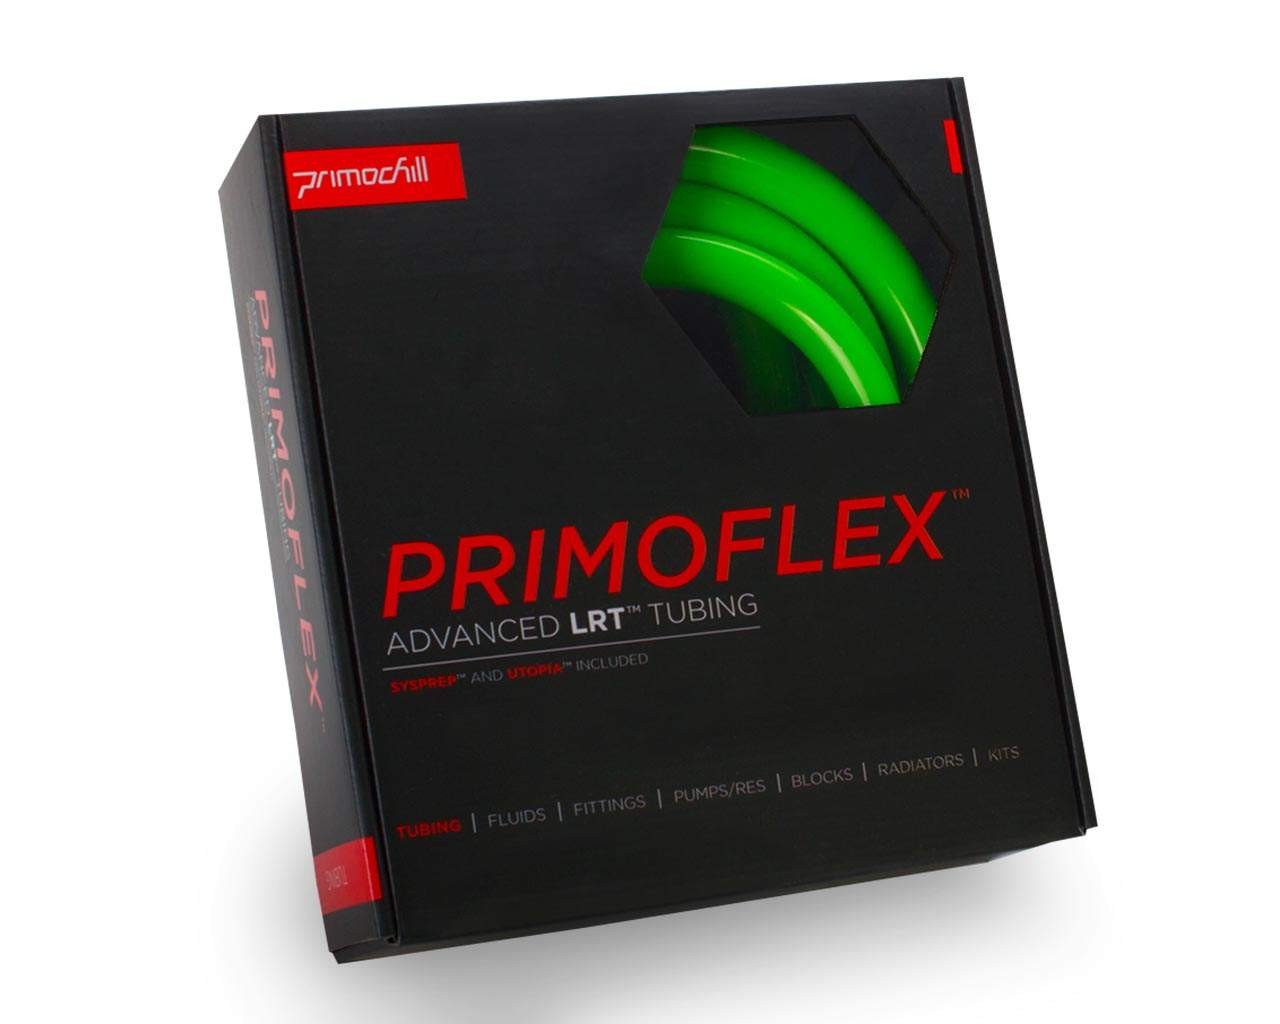 PrimoFlex Advanced LRT Soft Flexible Tubing - 7/16in.ID x 5/8in.OD, 10 feet - PrimoChill - KEEPING IT COOL Pearl UV Green